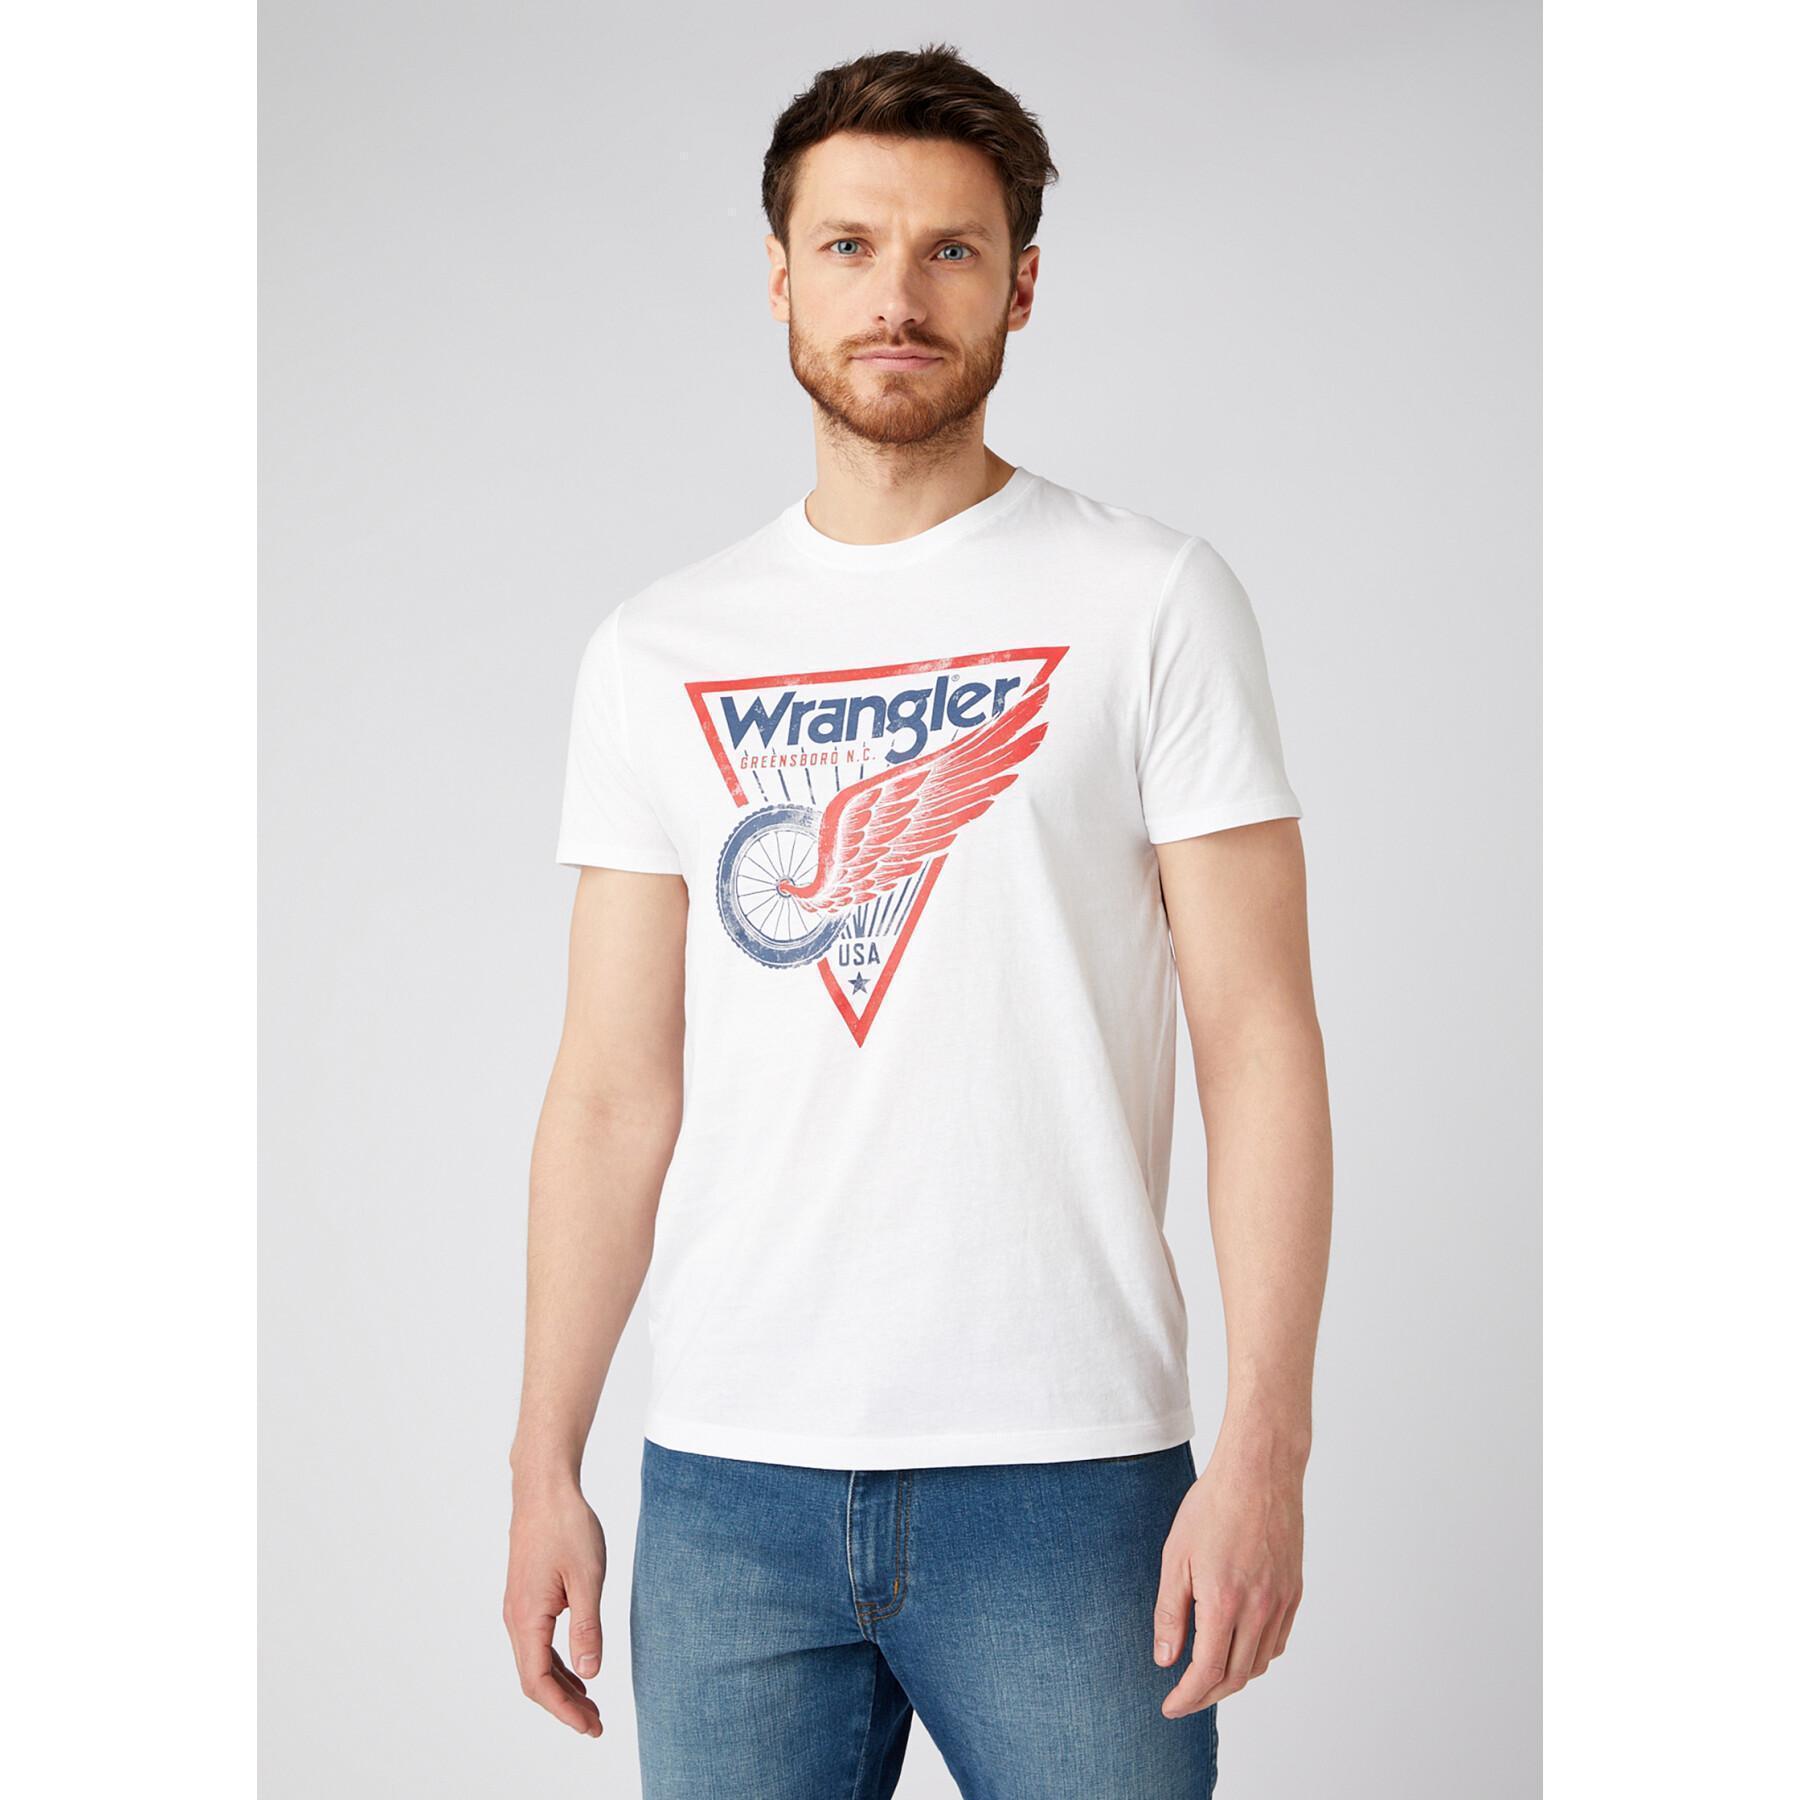 Camiseta Wrangler Americana